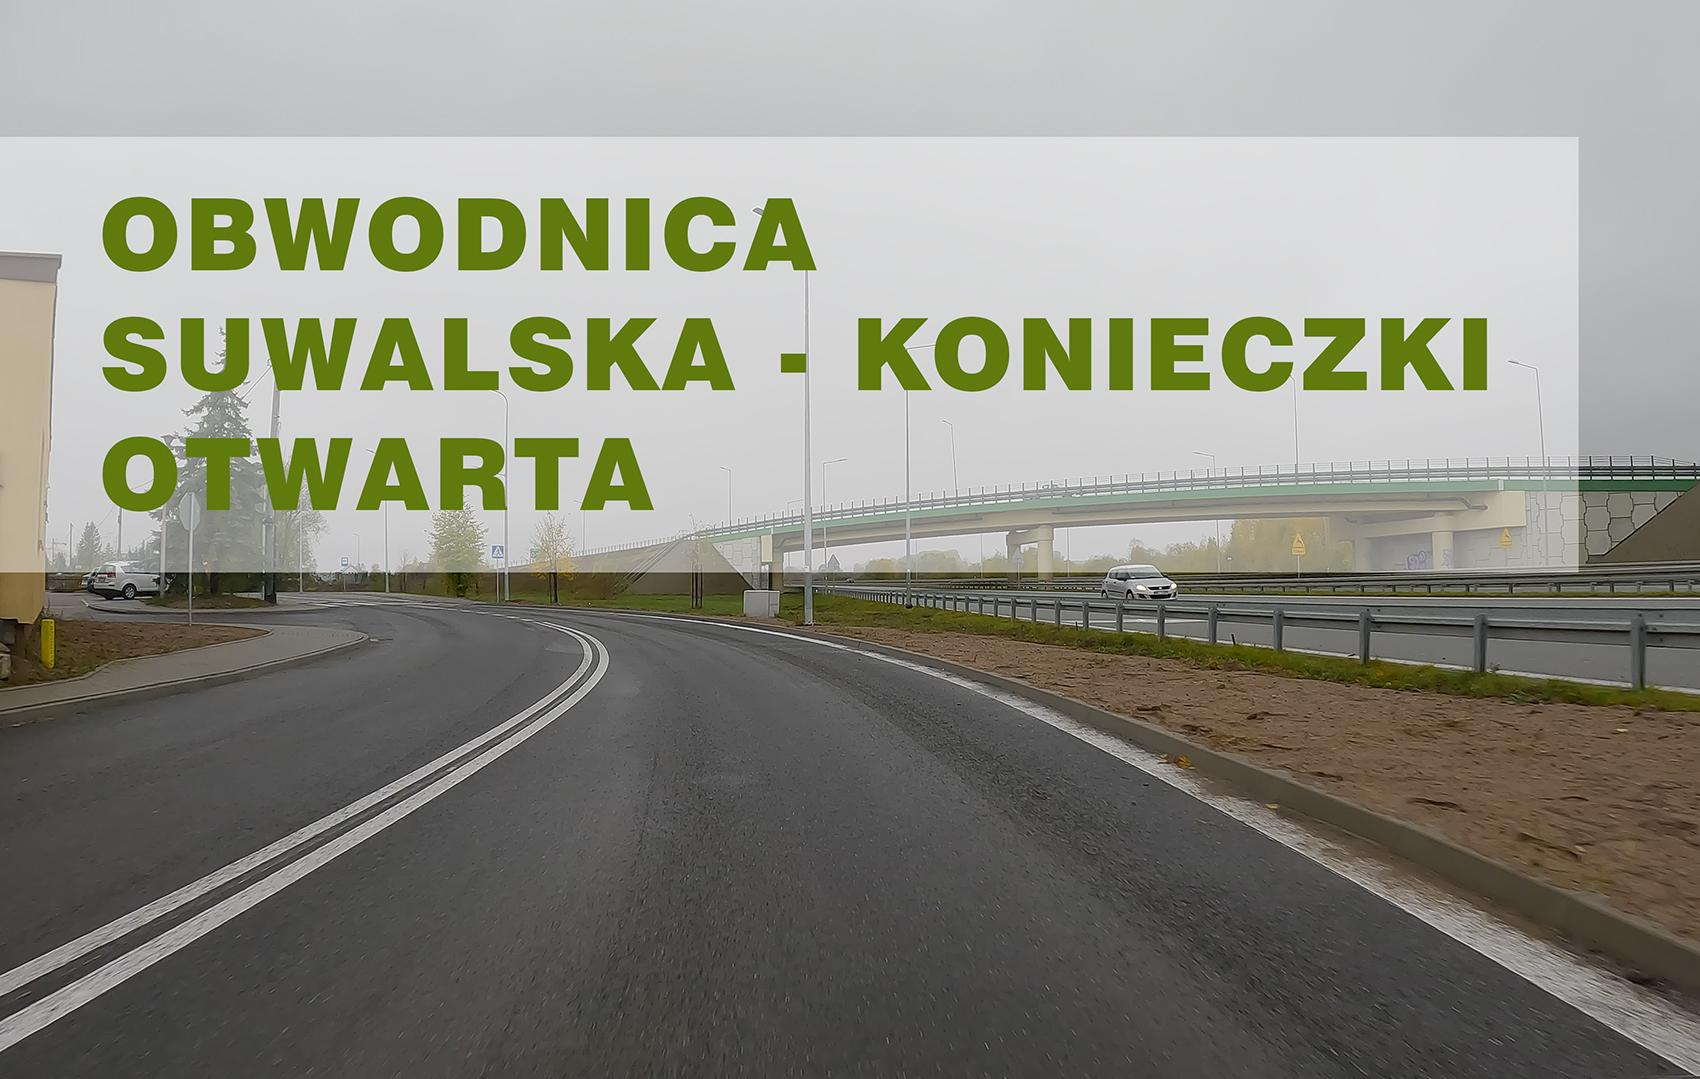 We will take the ring road from Suwalska Street to Konieczki